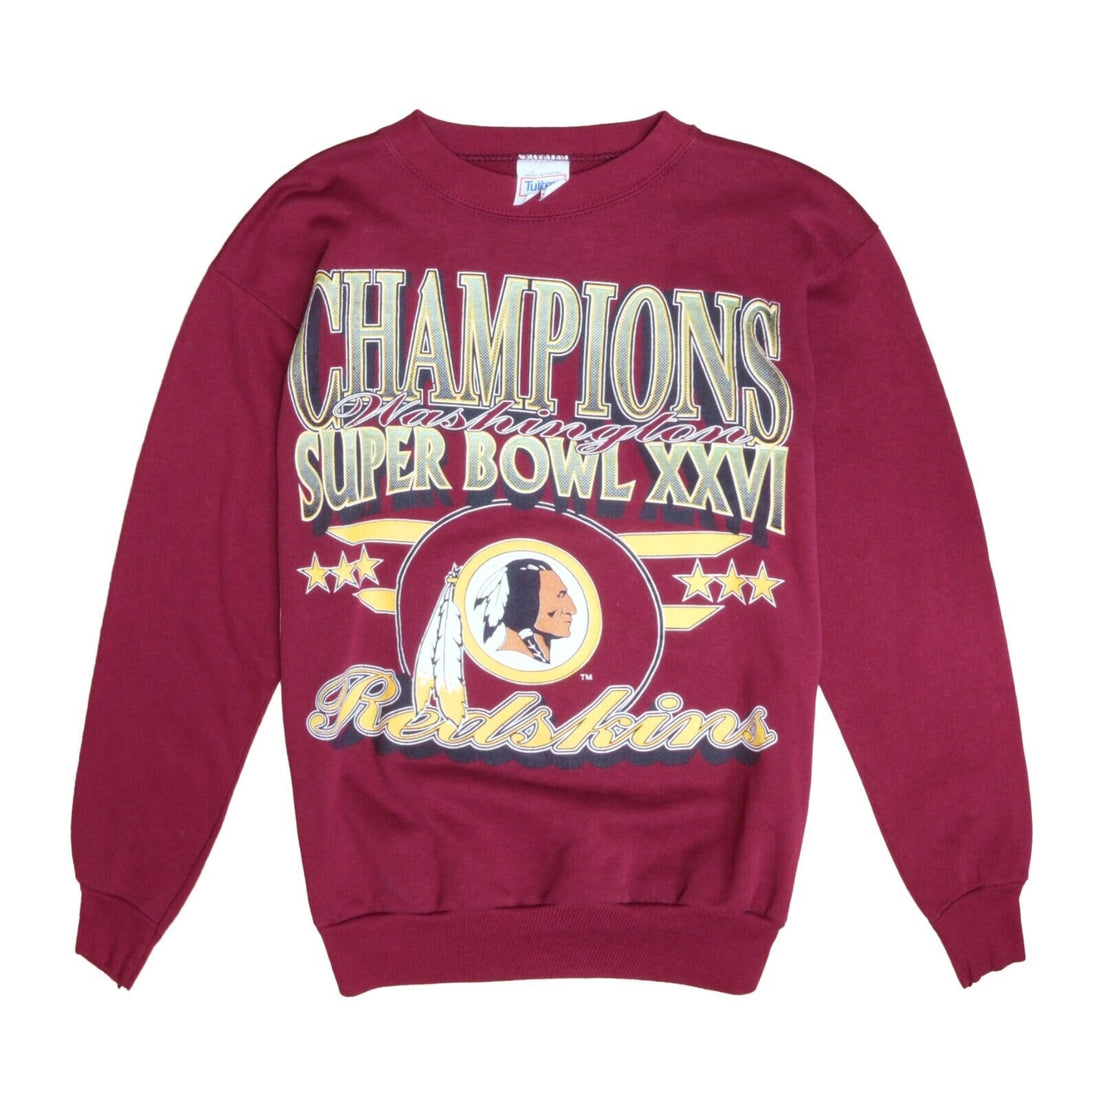 Vintage Washington Redskins Super Bowl XXVI Sweatshirt Size Medium 90s NFL